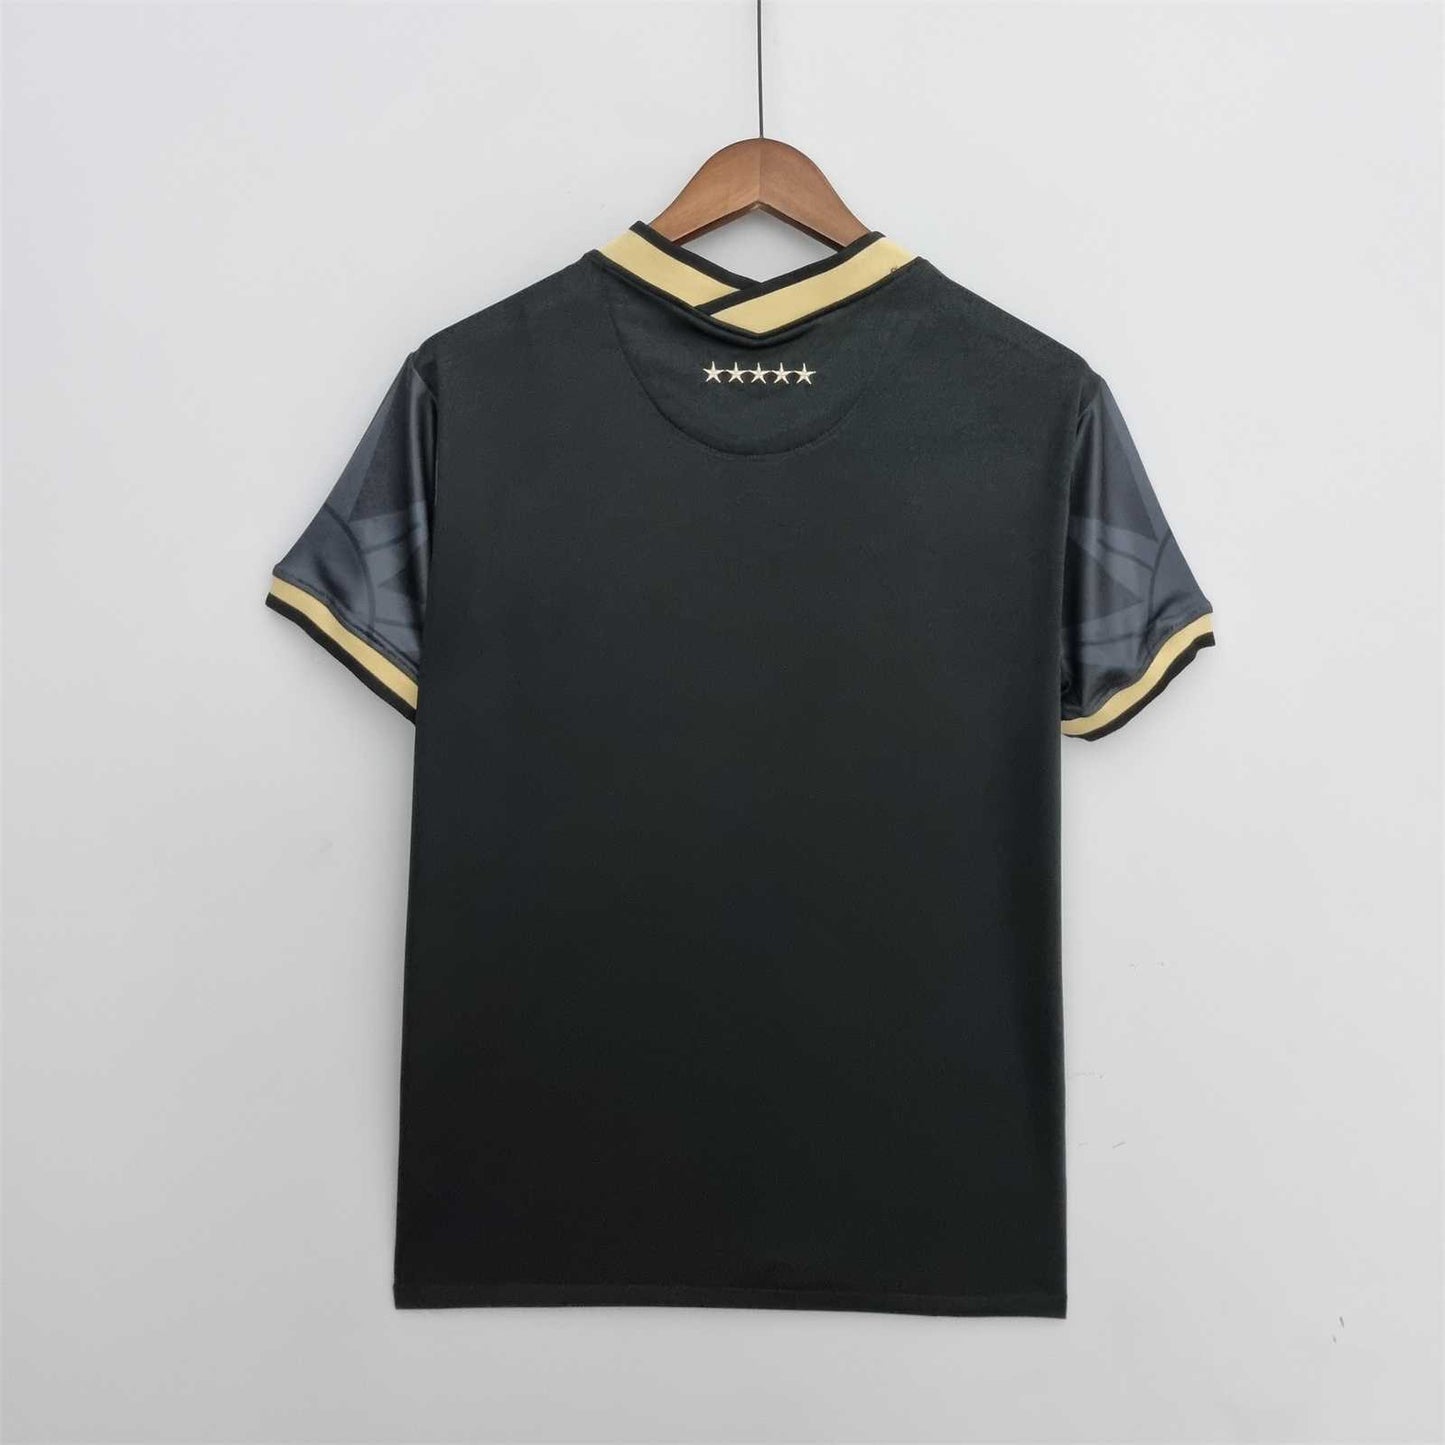 Brazil Shirt Black